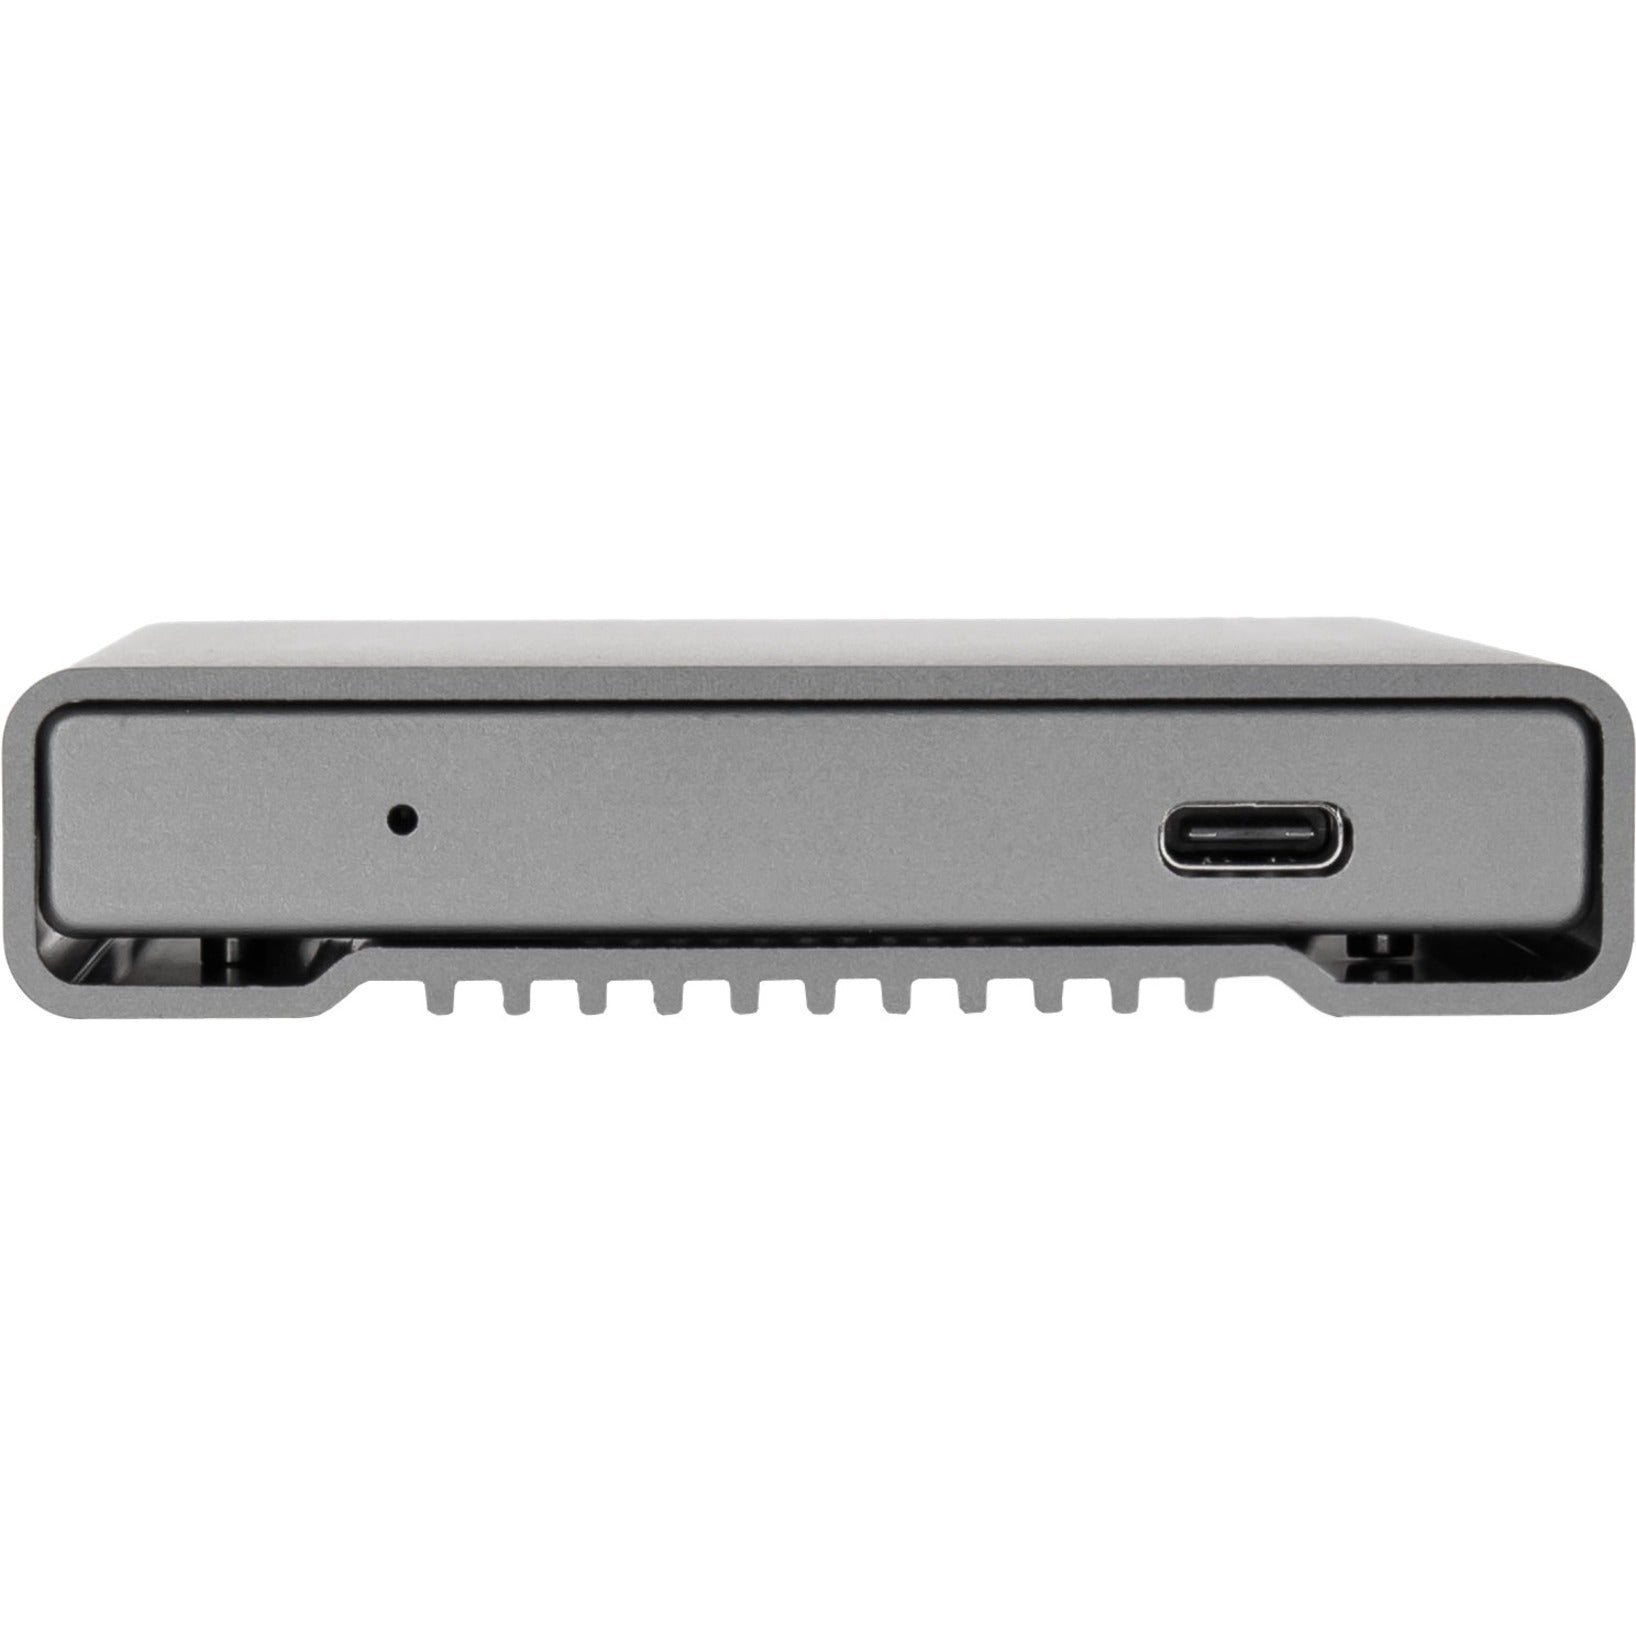 Rocstor GP3602-01 Rocpro P33 1TB Portable USB 3.1 Gen2 10Gbps USB 3.0 External Hard Drive, Aluminum Gray